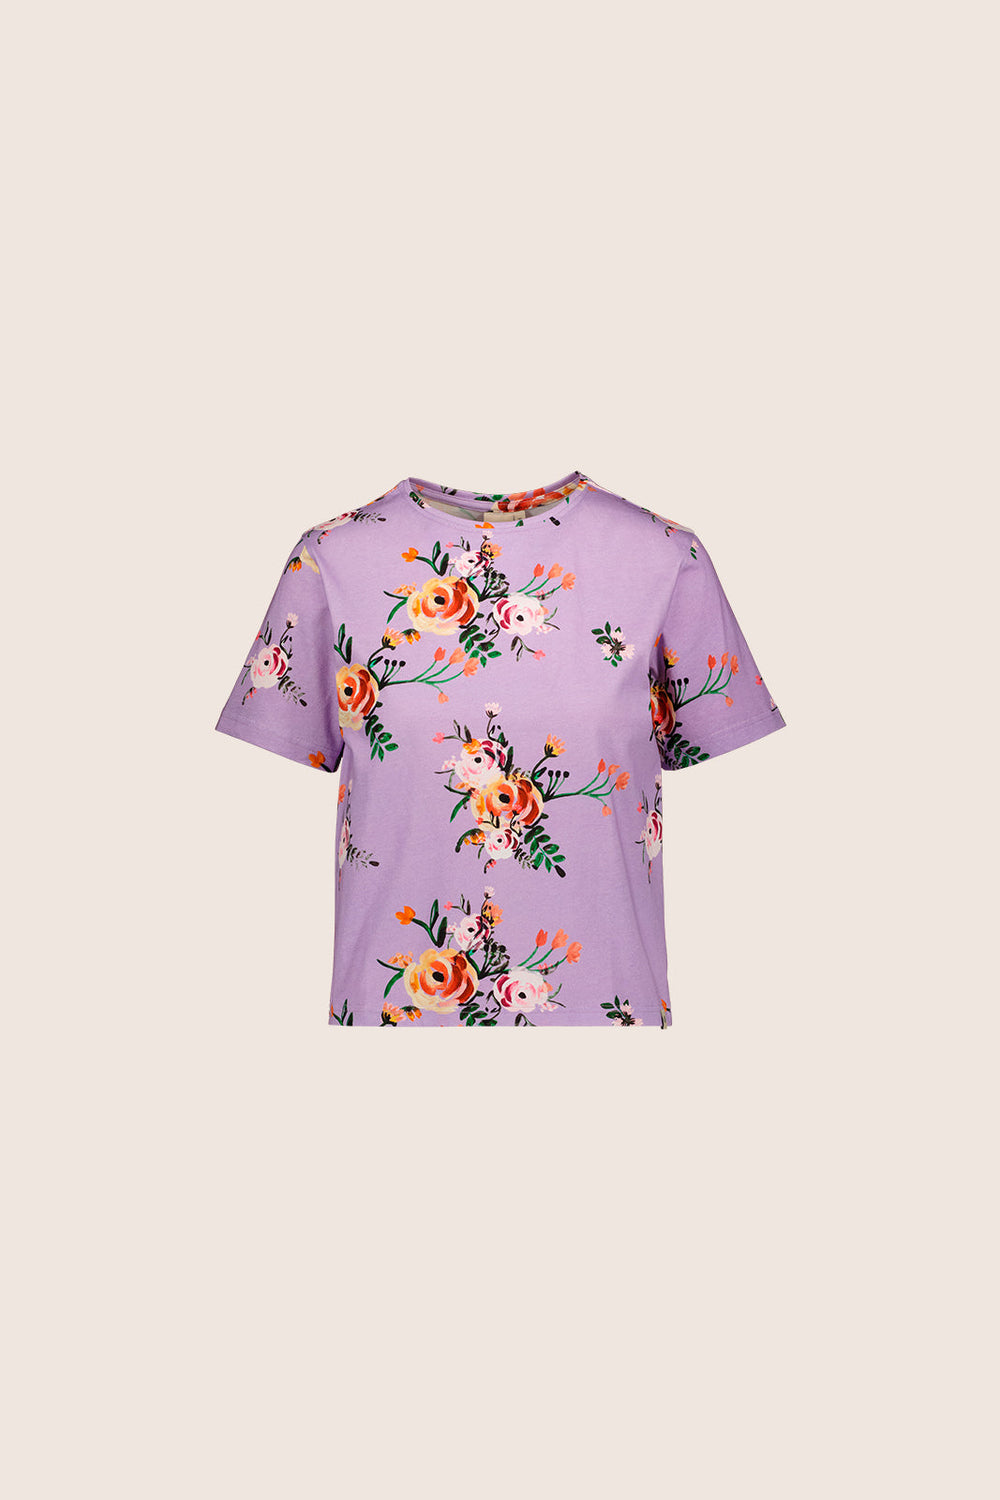 KAIKO - T-Shirt - Lavender Bloom 6